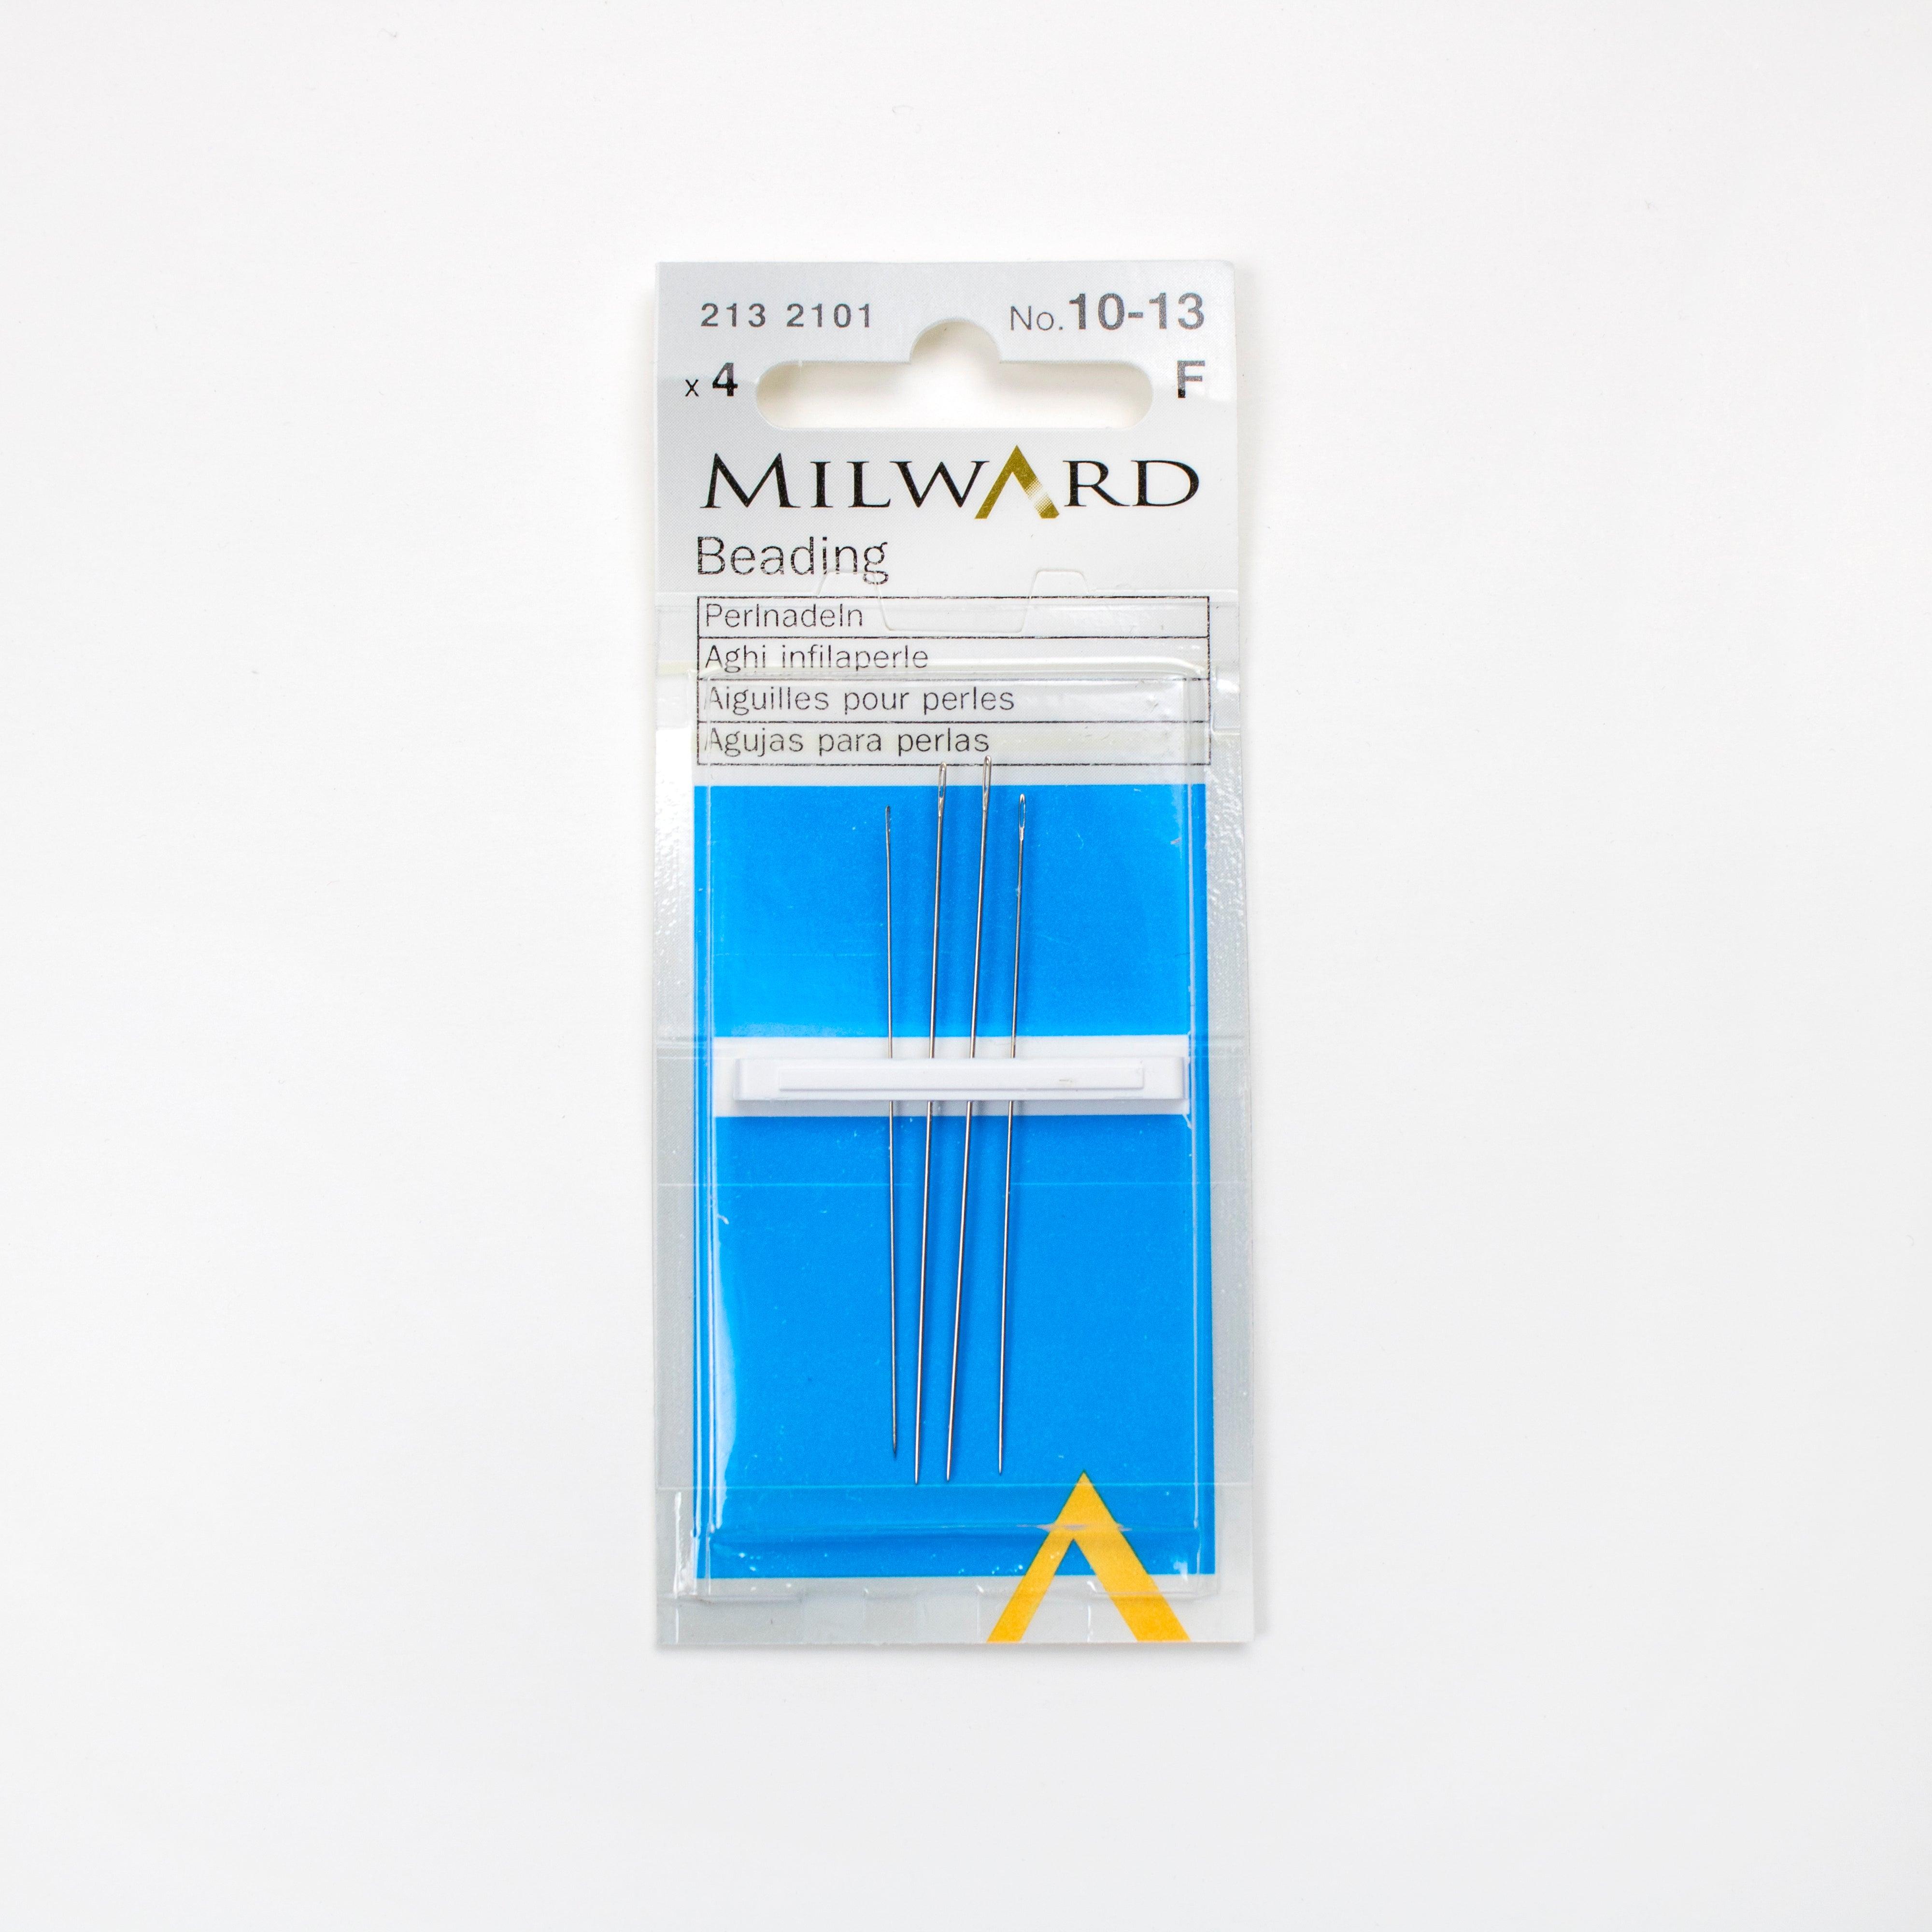 Milward Beading Needles No.10-13 - 4 Pack - Luca-S Needles